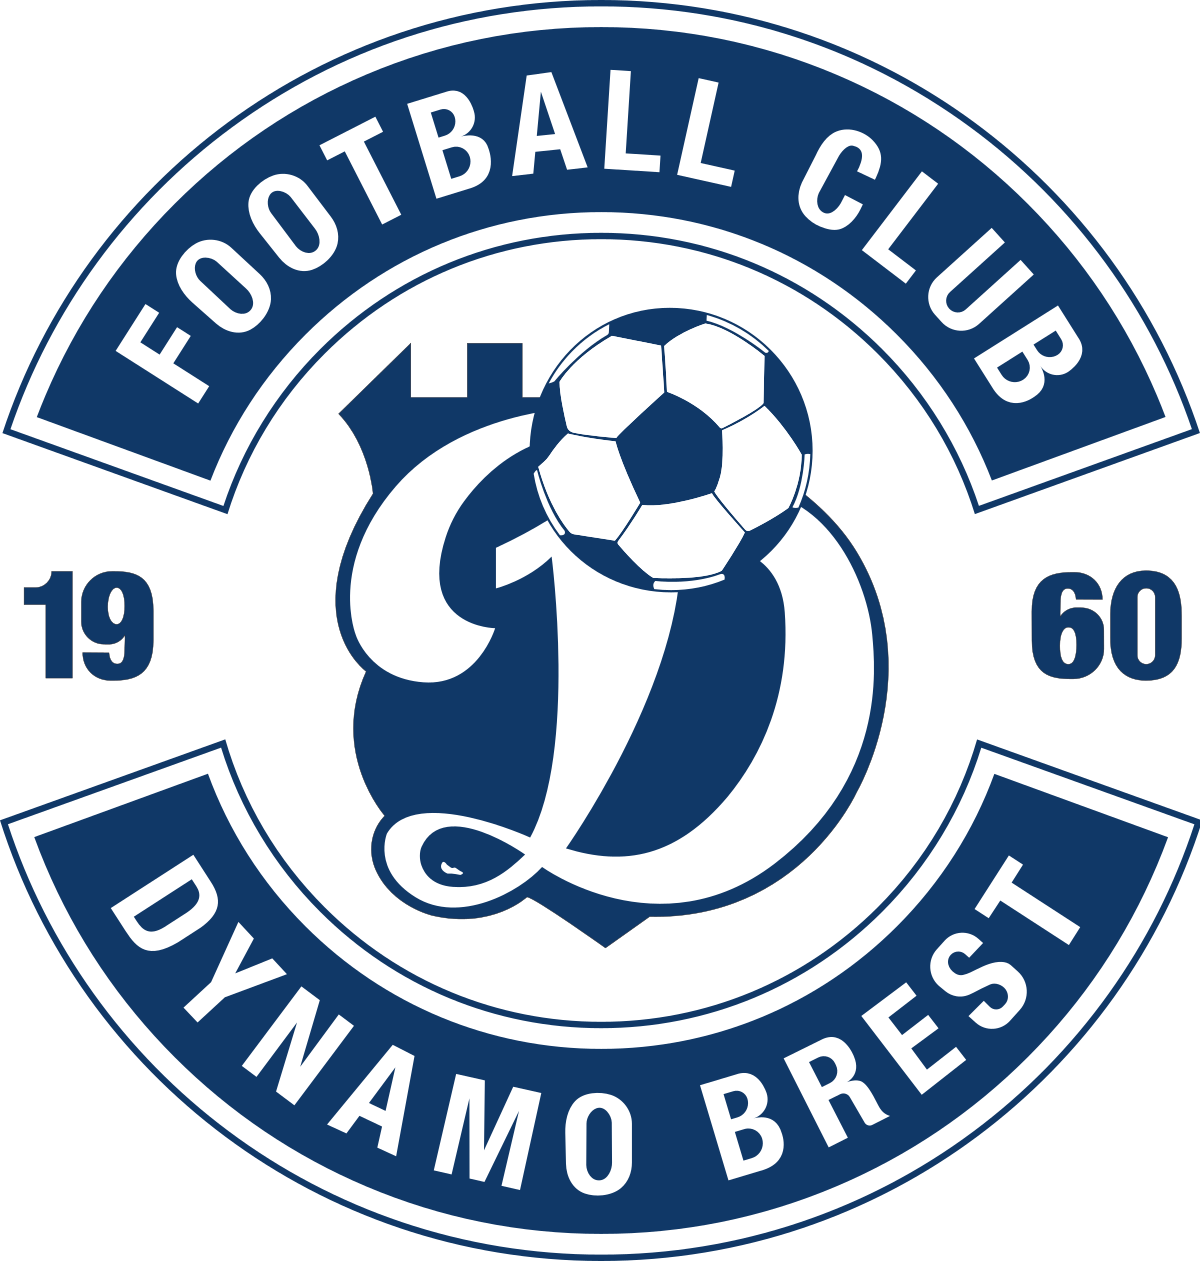 Dinamo Brest-2 logo